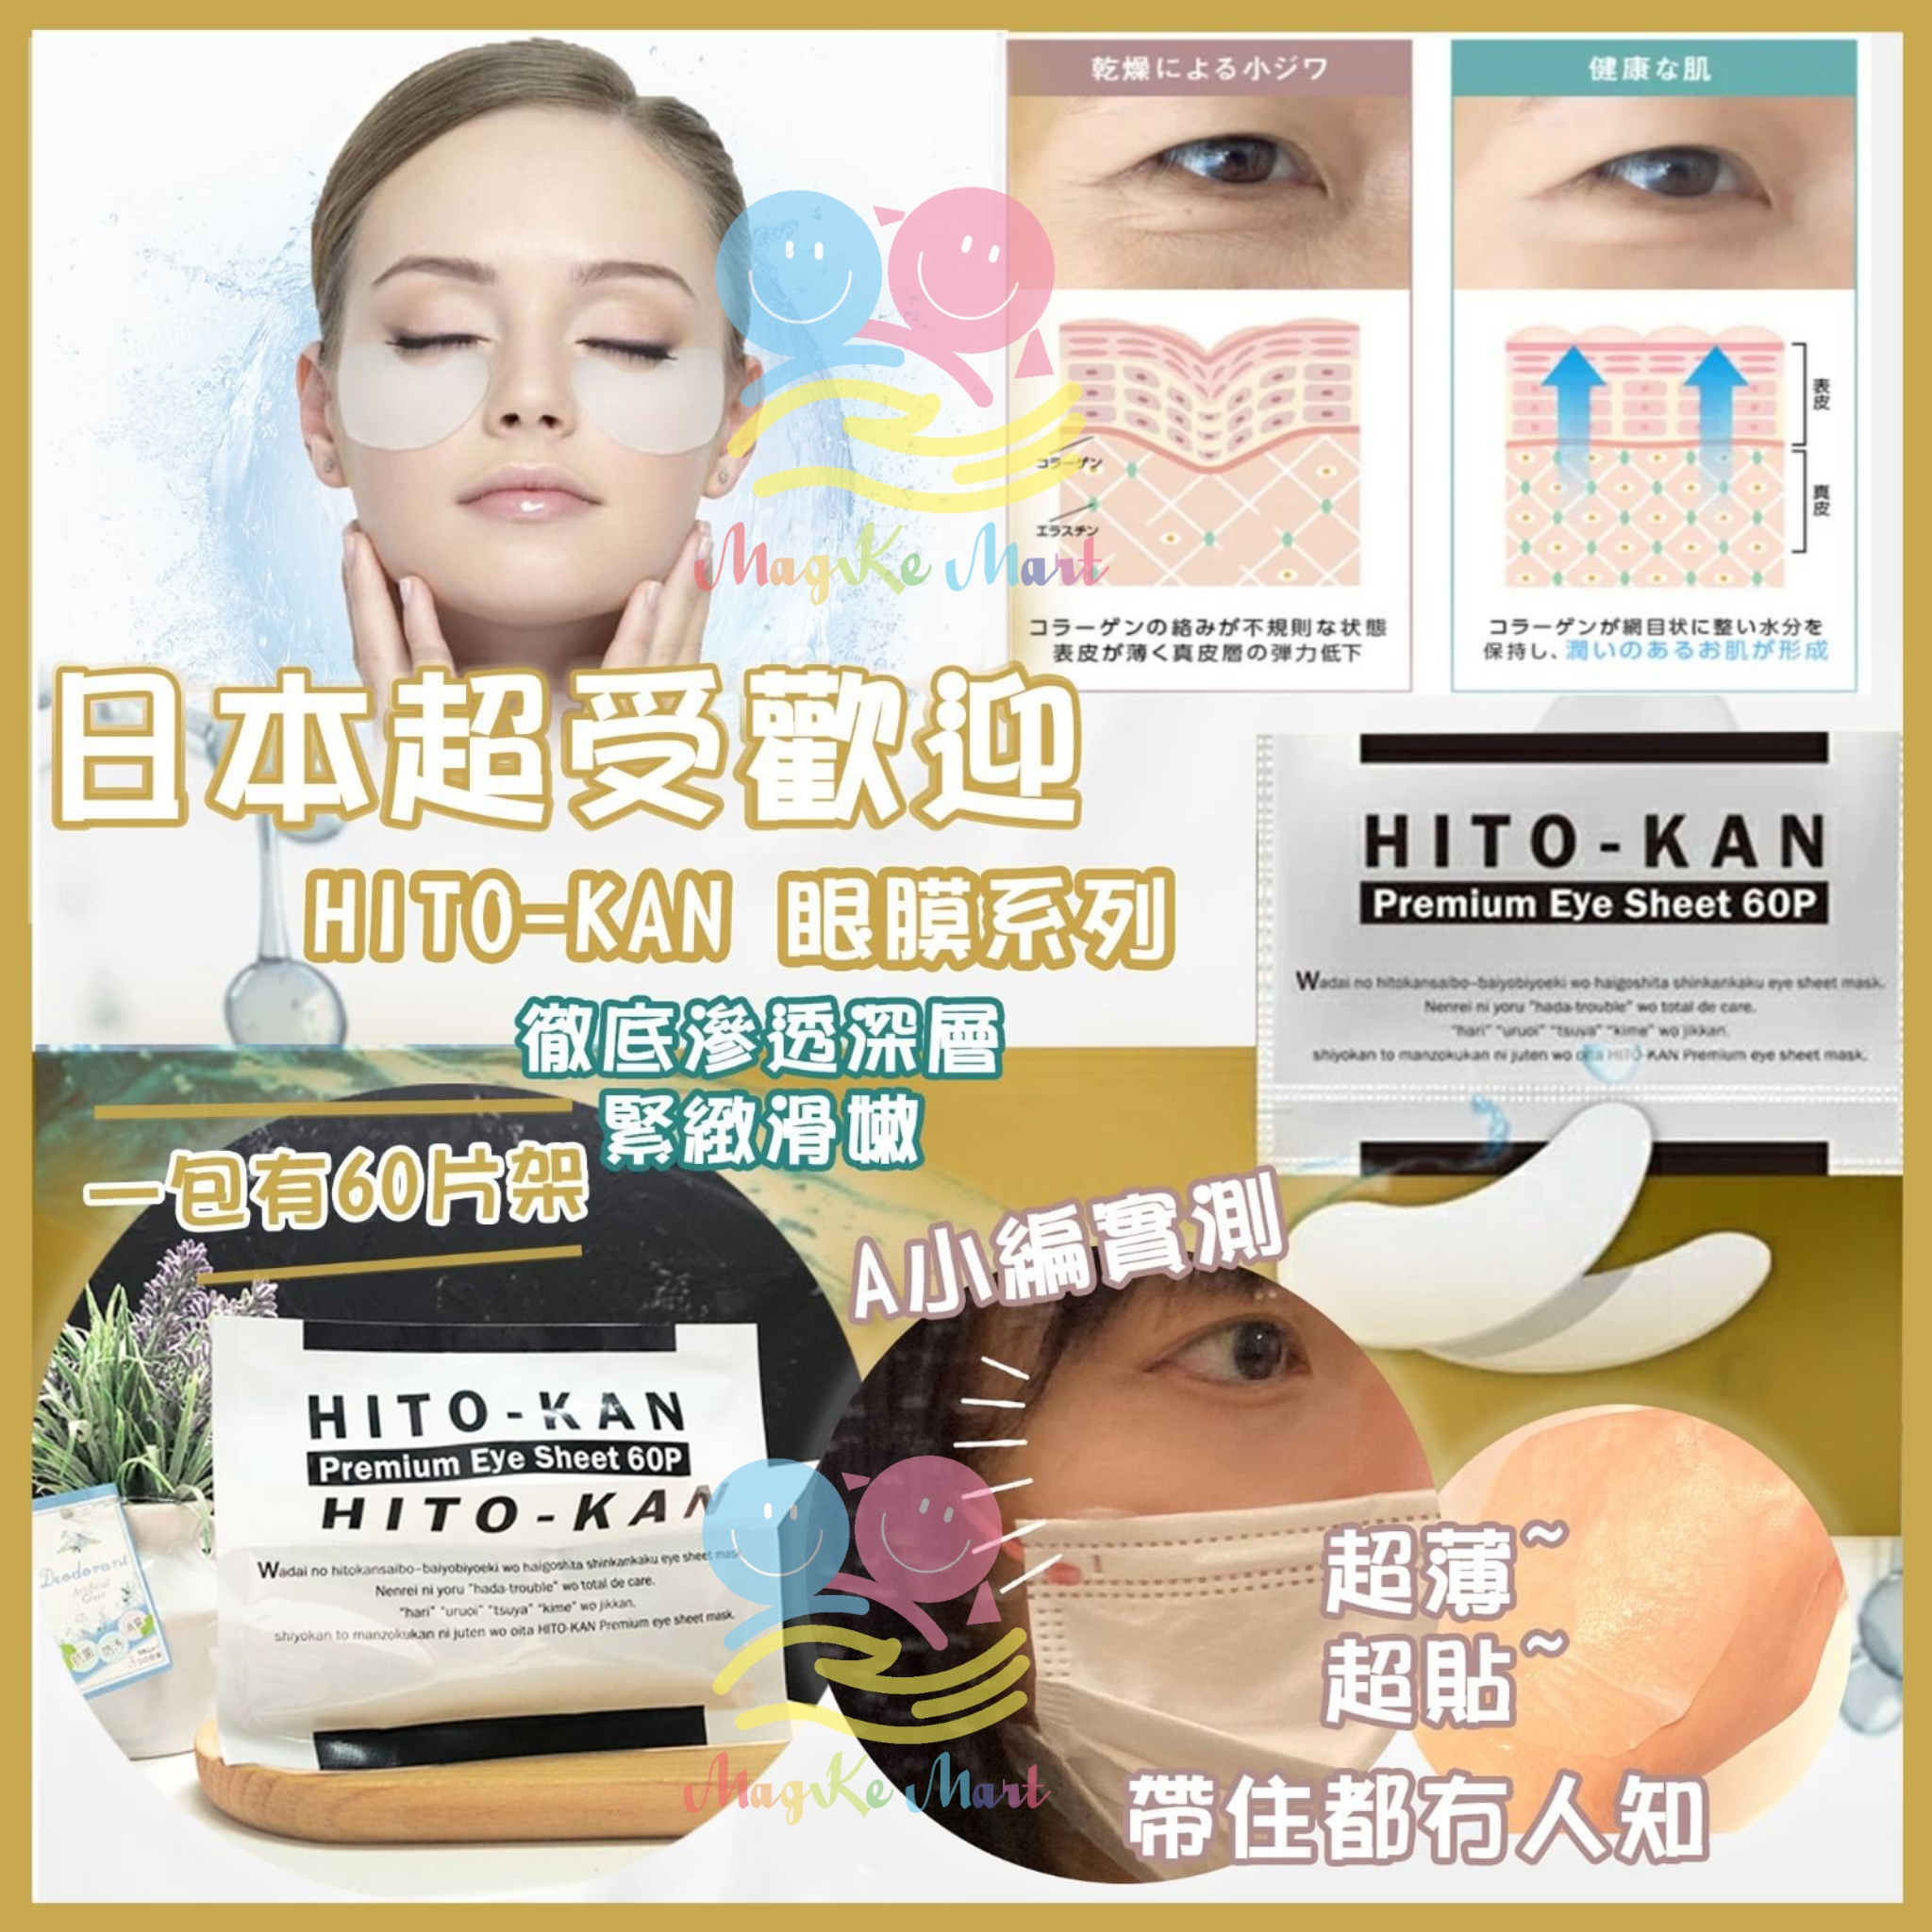 日本 HITO—KAN Premium 幹細胞精華液眼膜 (1包60片)